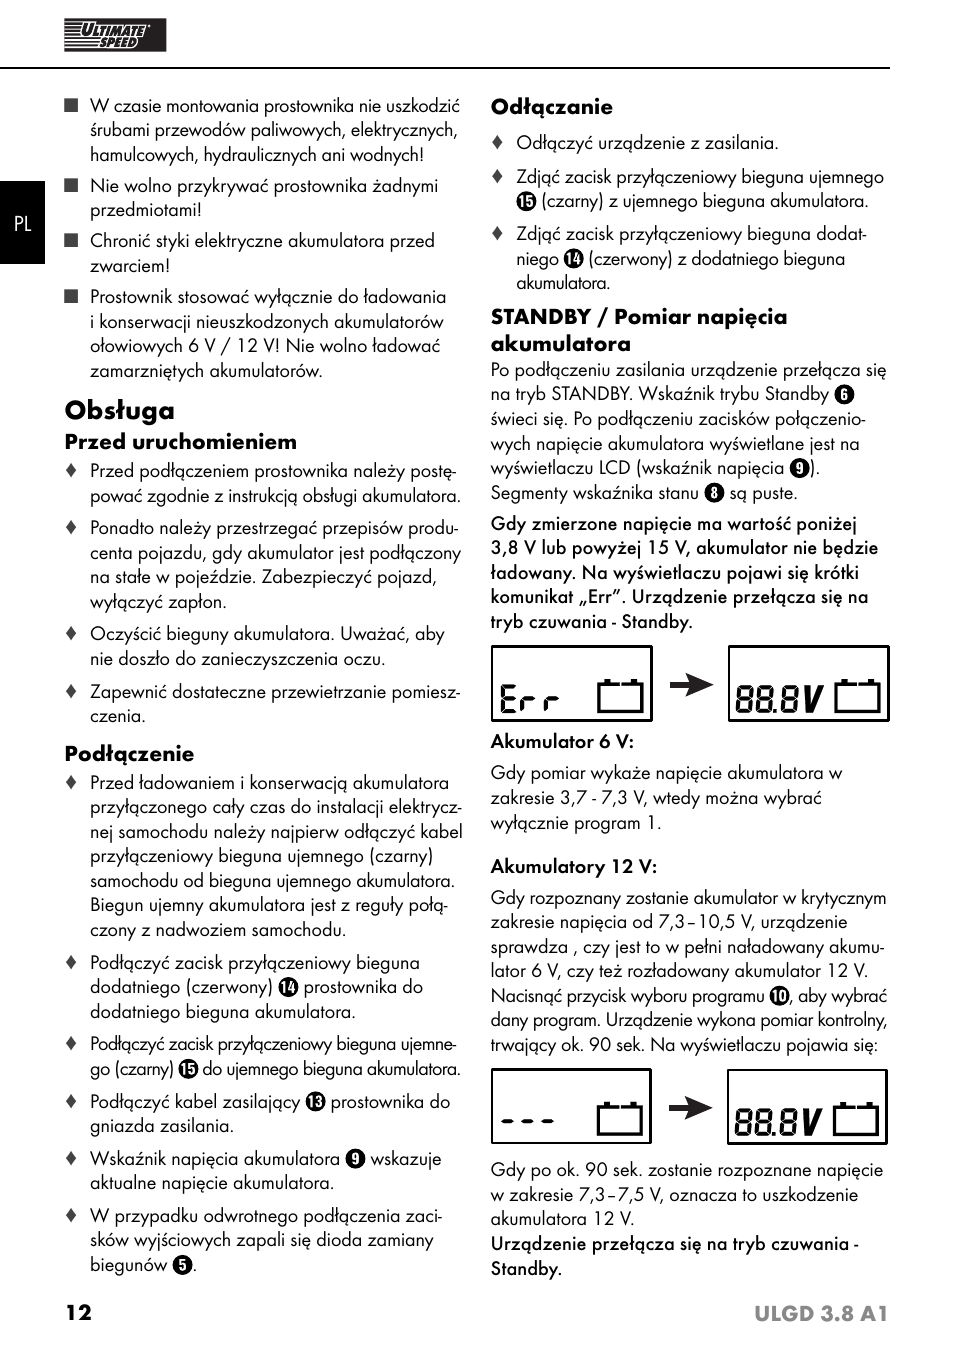 Obsługa | Ultimate Speed ULGD 3.8 A1 User Manual | Page 15 / 51 | Original  mode